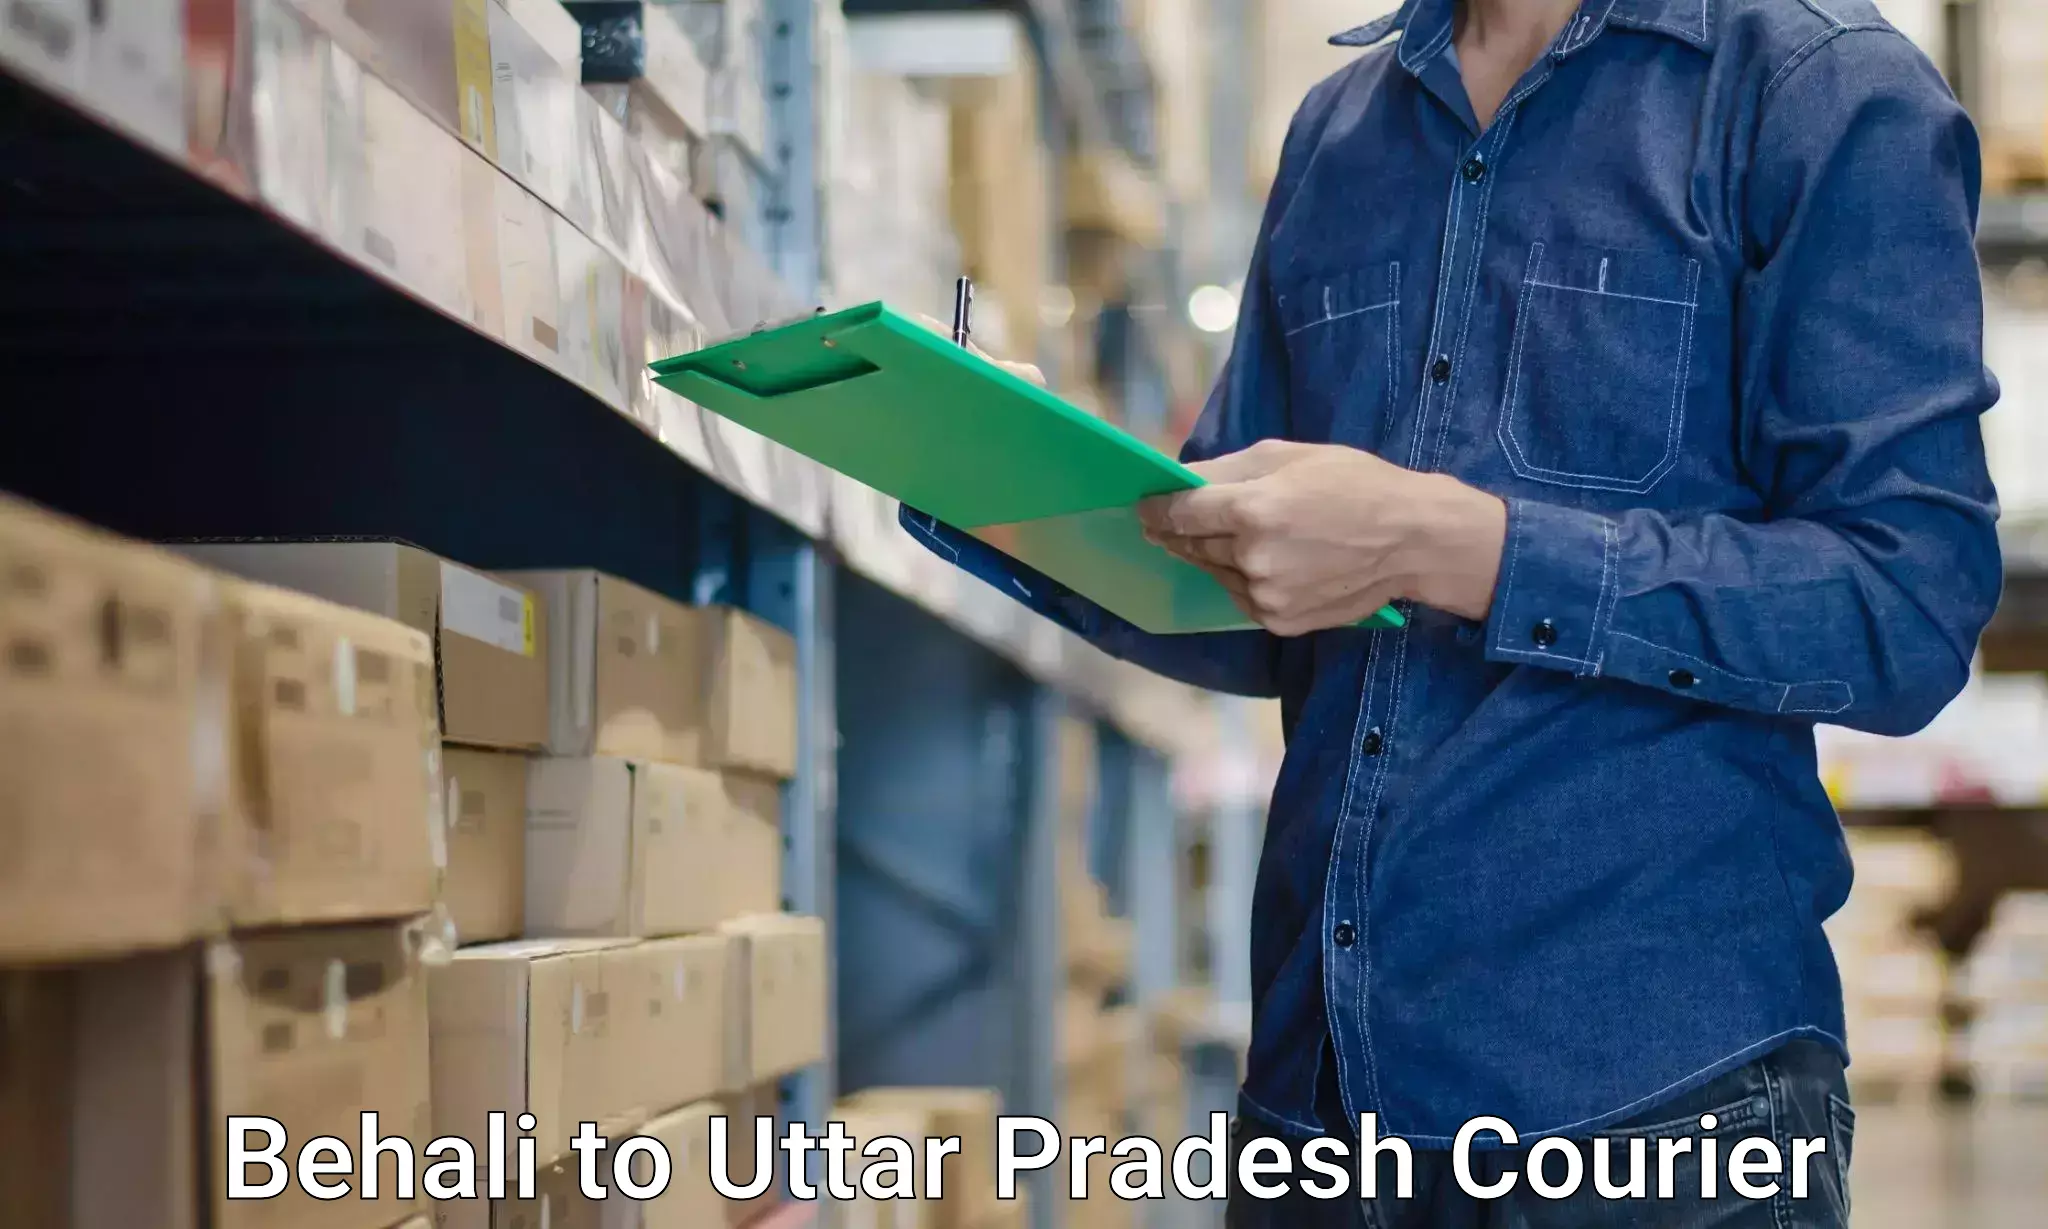 Residential moving experts Behali to Uttar Pradesh